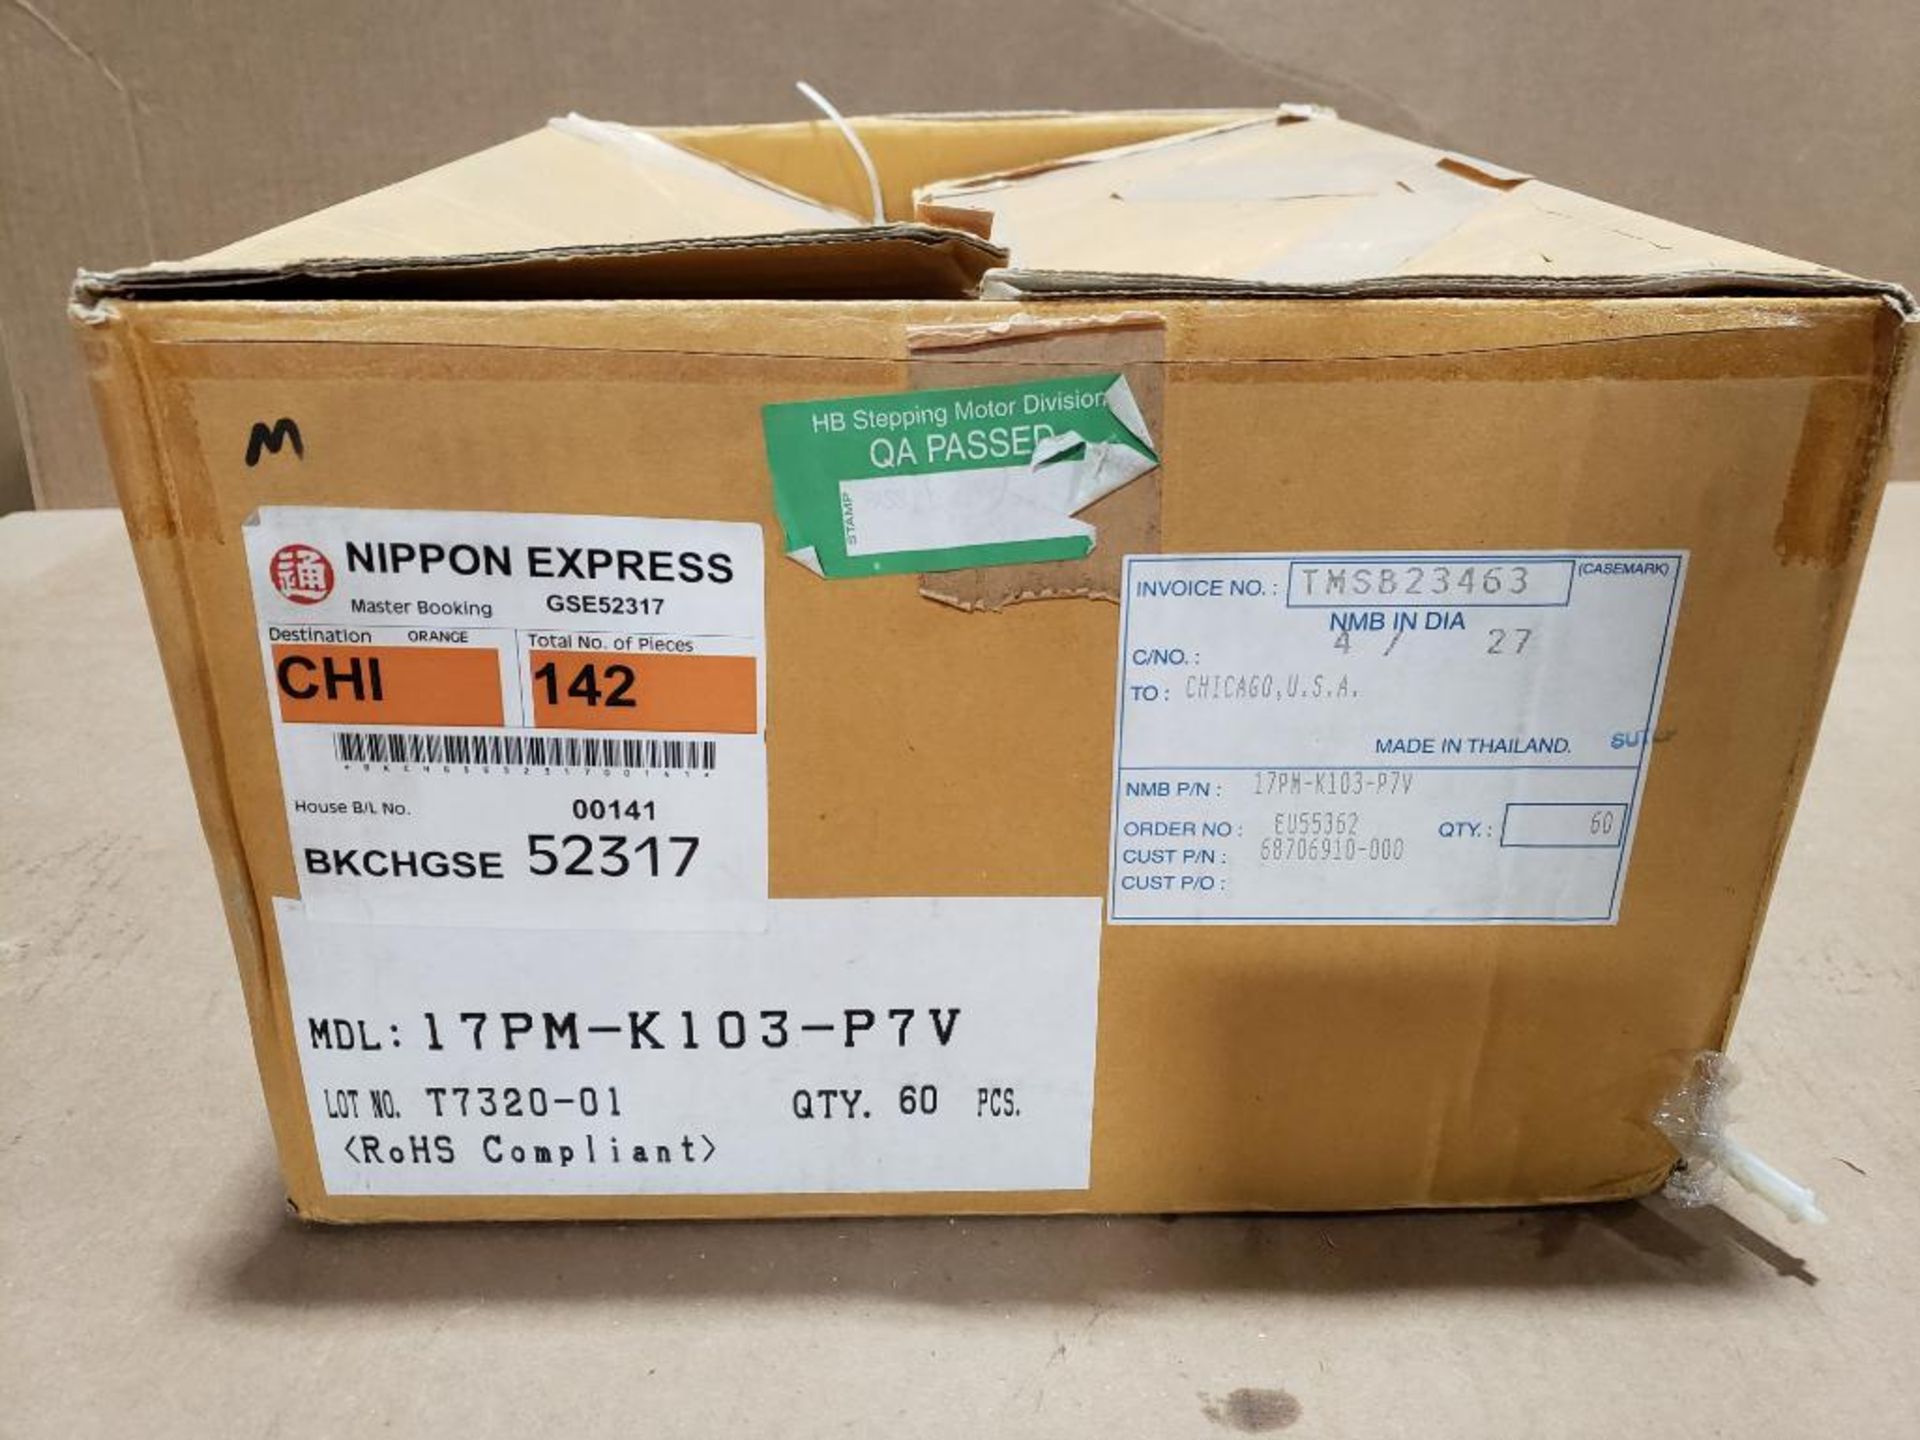 Qty 60 - Nippon Express motors. Part number 68706910-000.